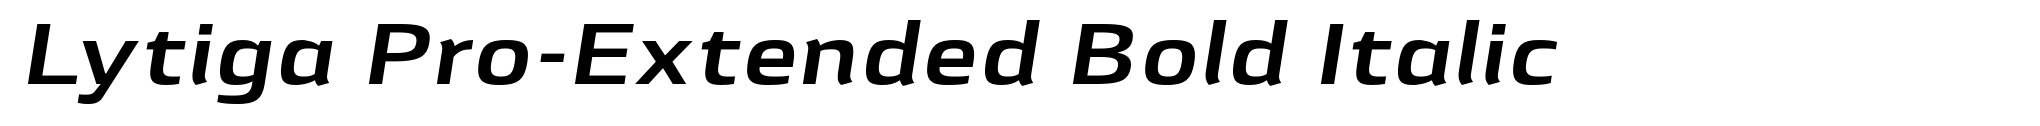 Lytiga Pro-Extended Bold Italic image